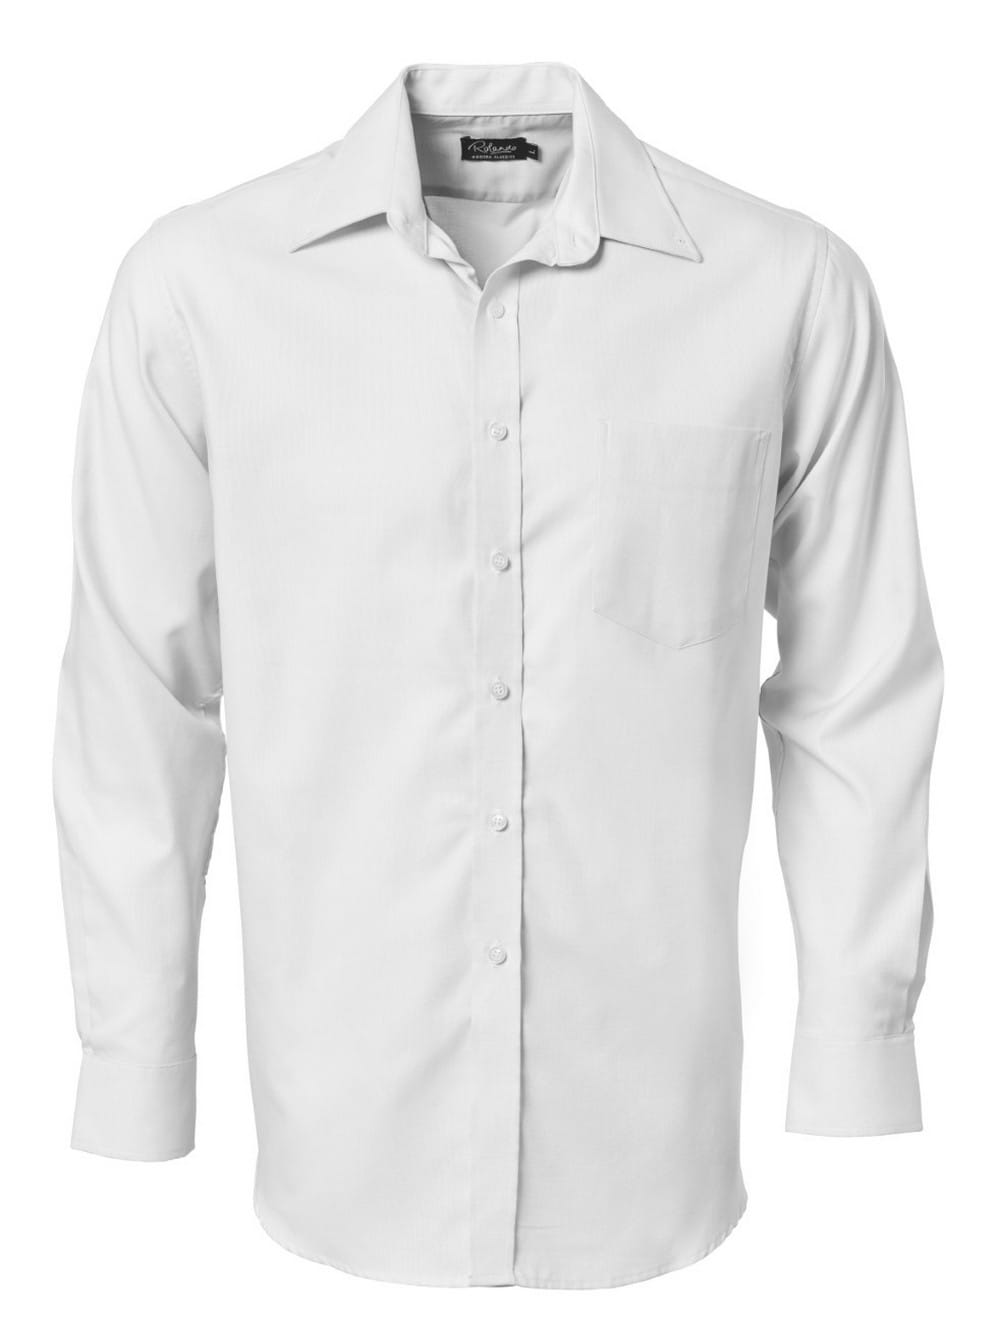 165G Crew Neck T-Shirt - White